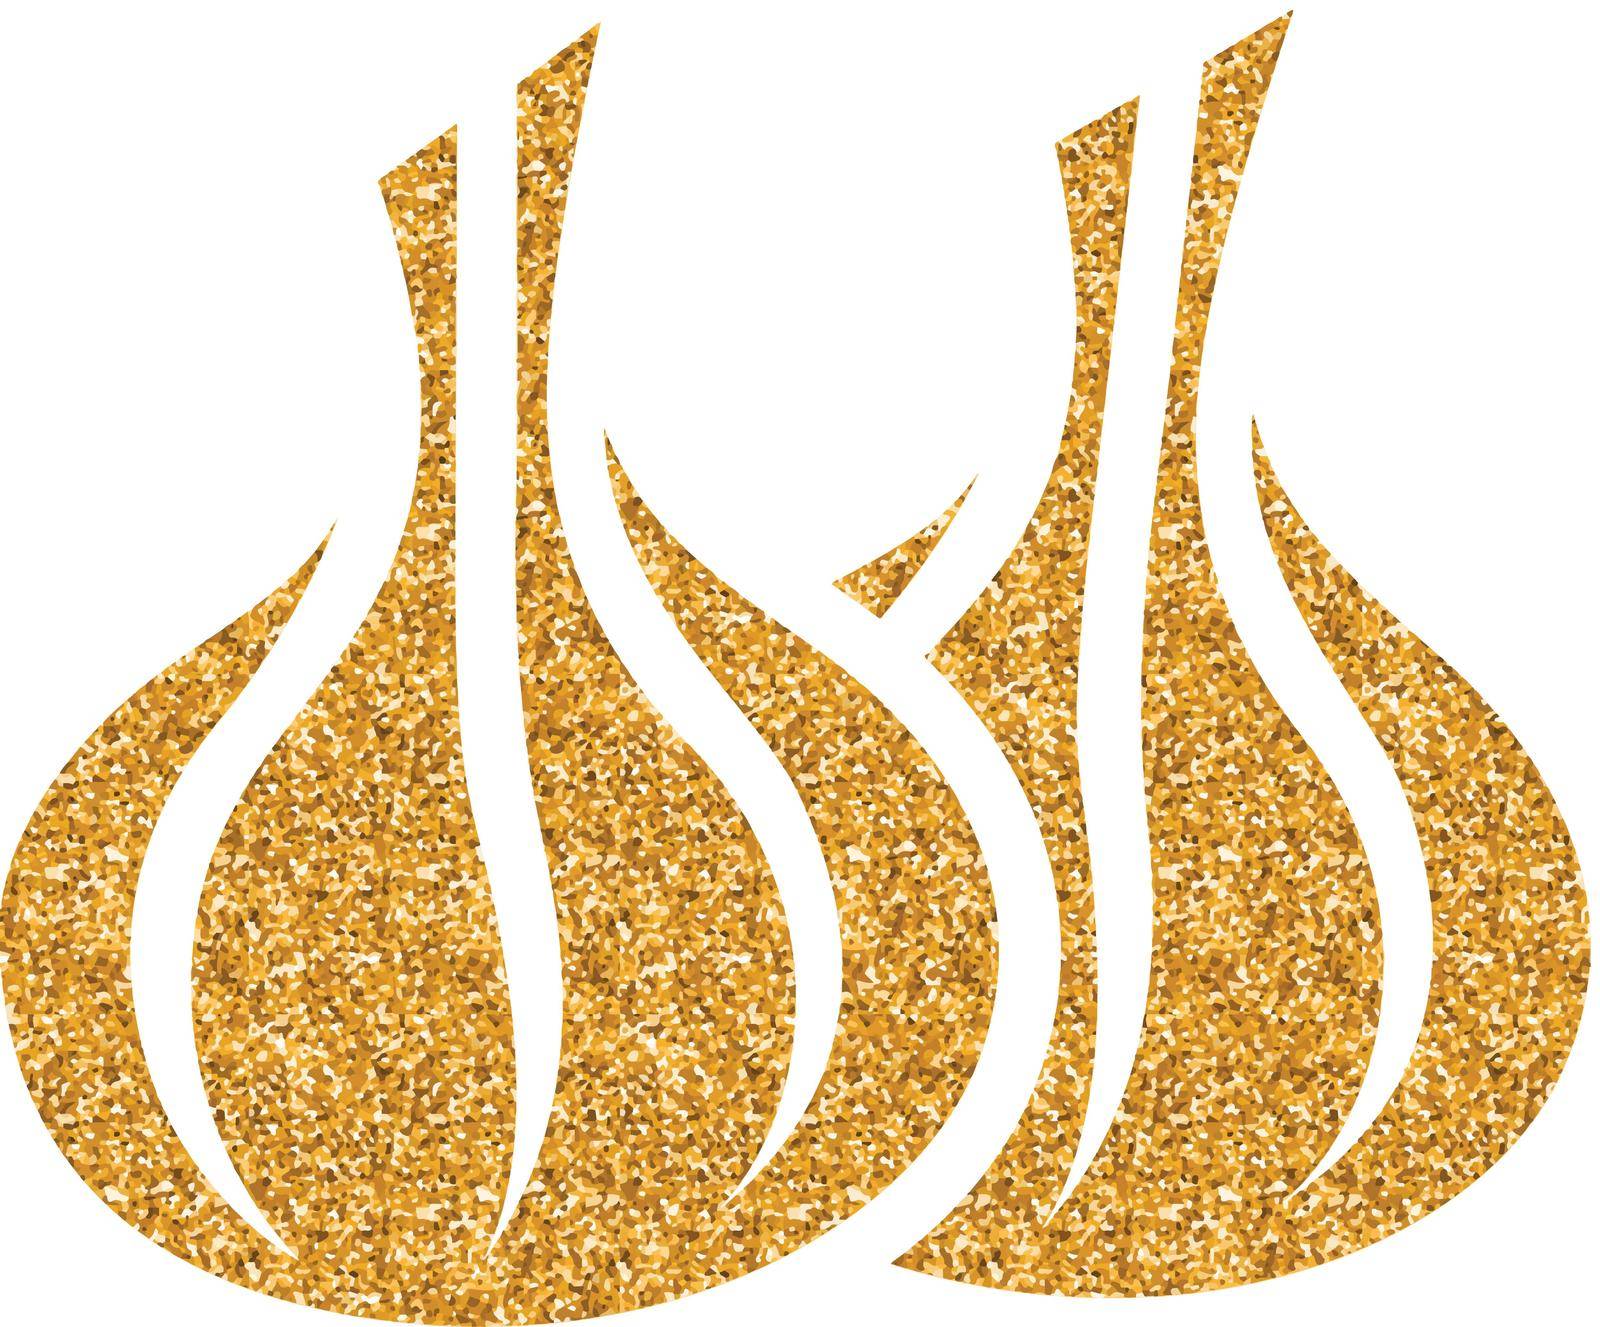 Garlic icon in gold glitter texture. Sparkle luxury style vector illustration.